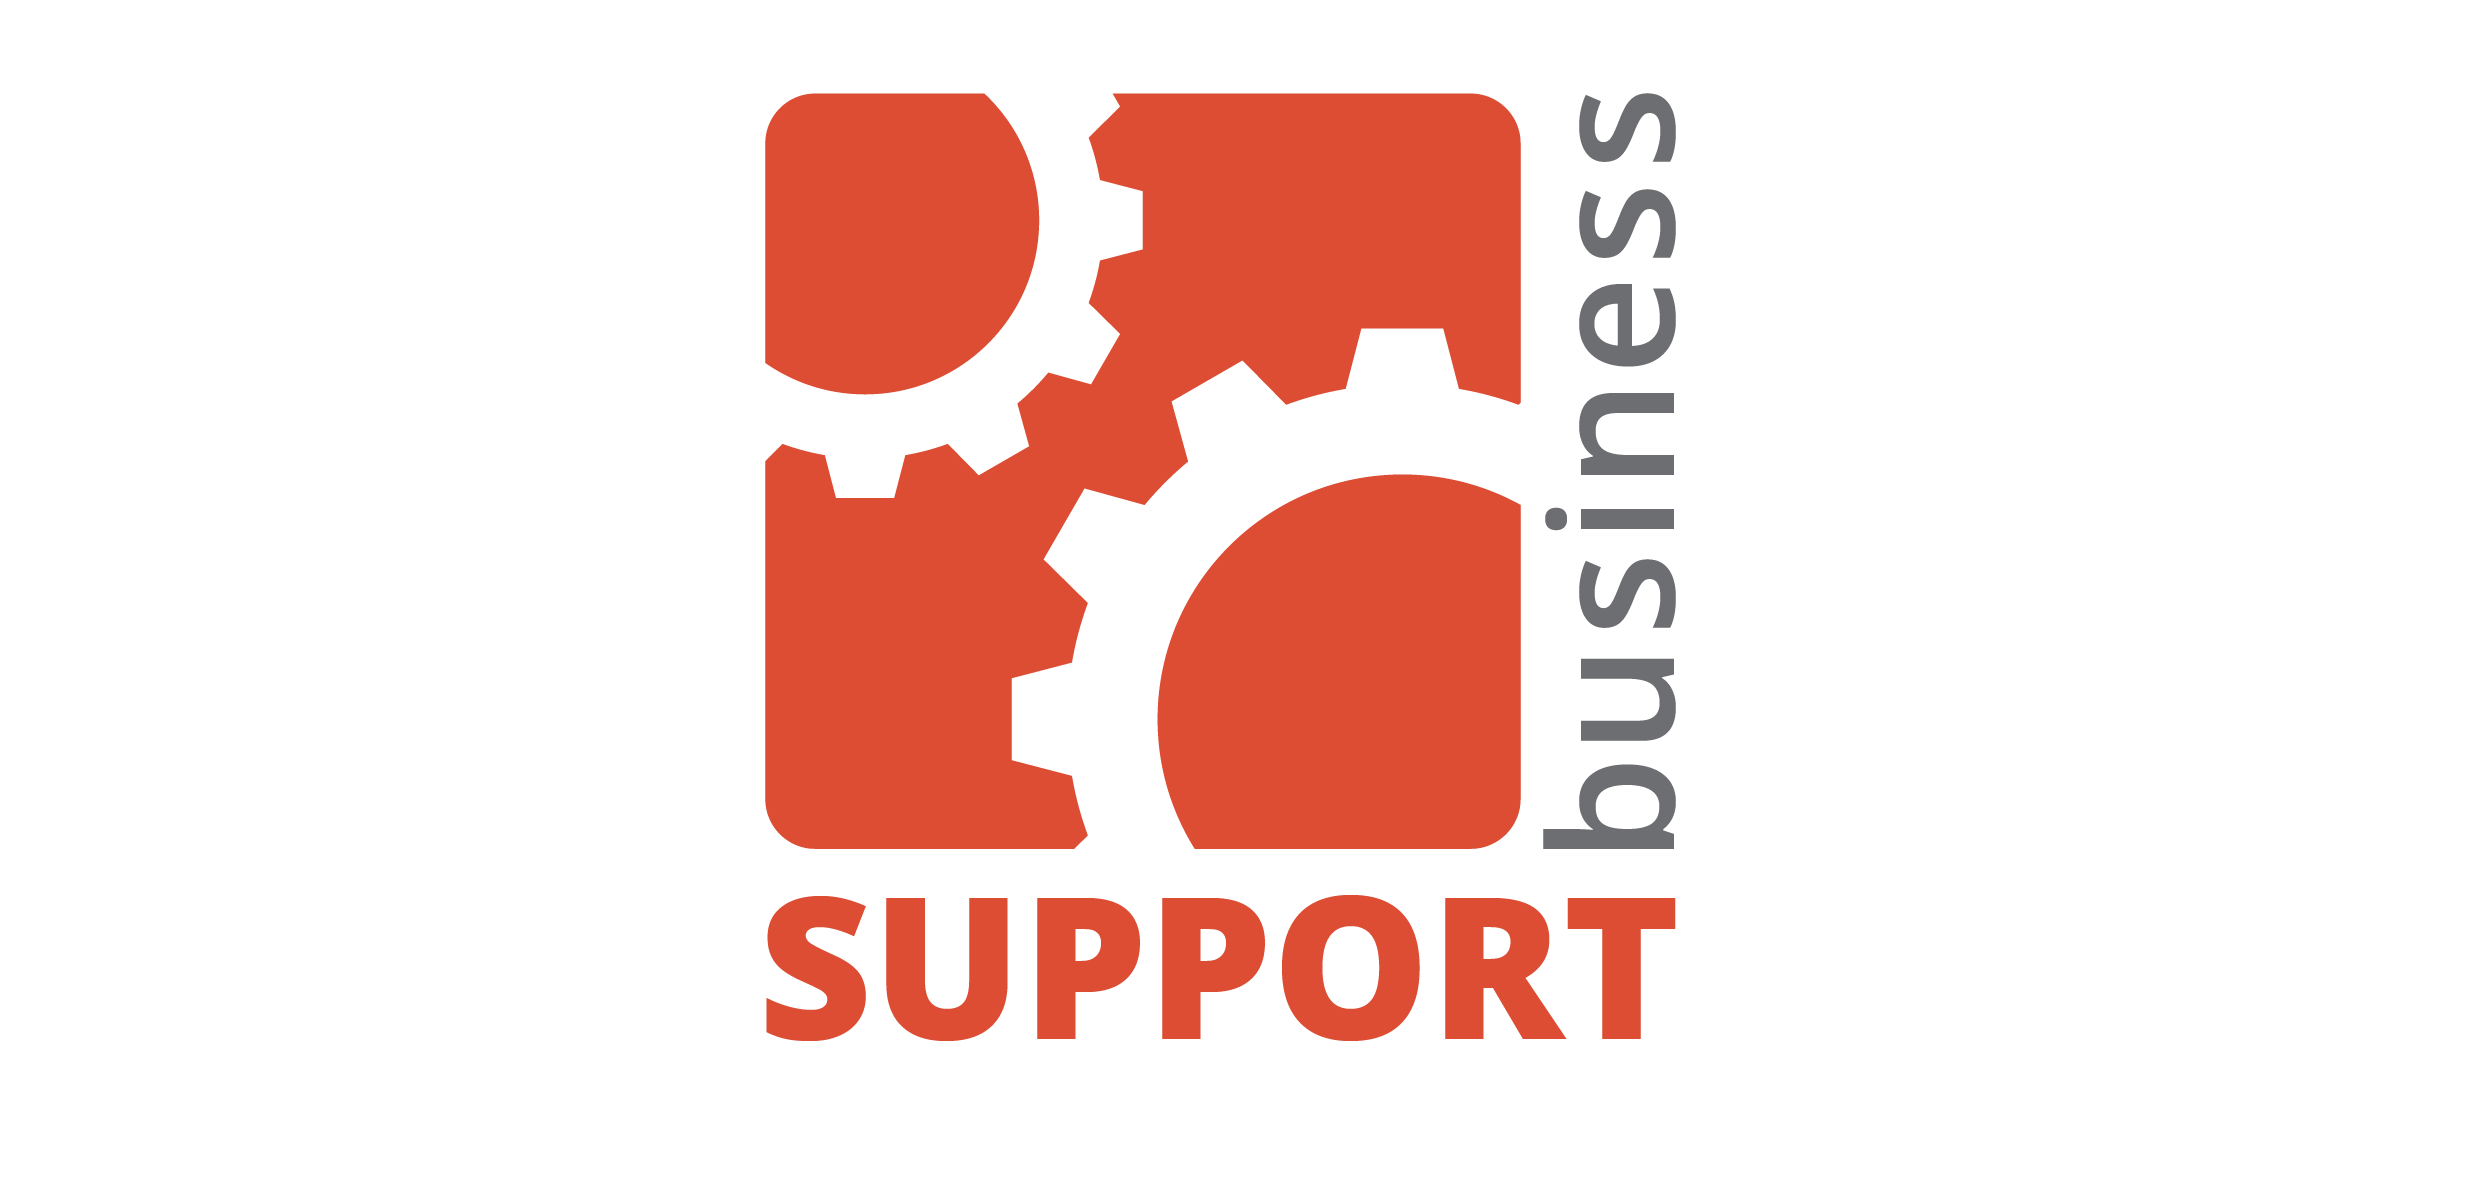 Support Business logo jpg